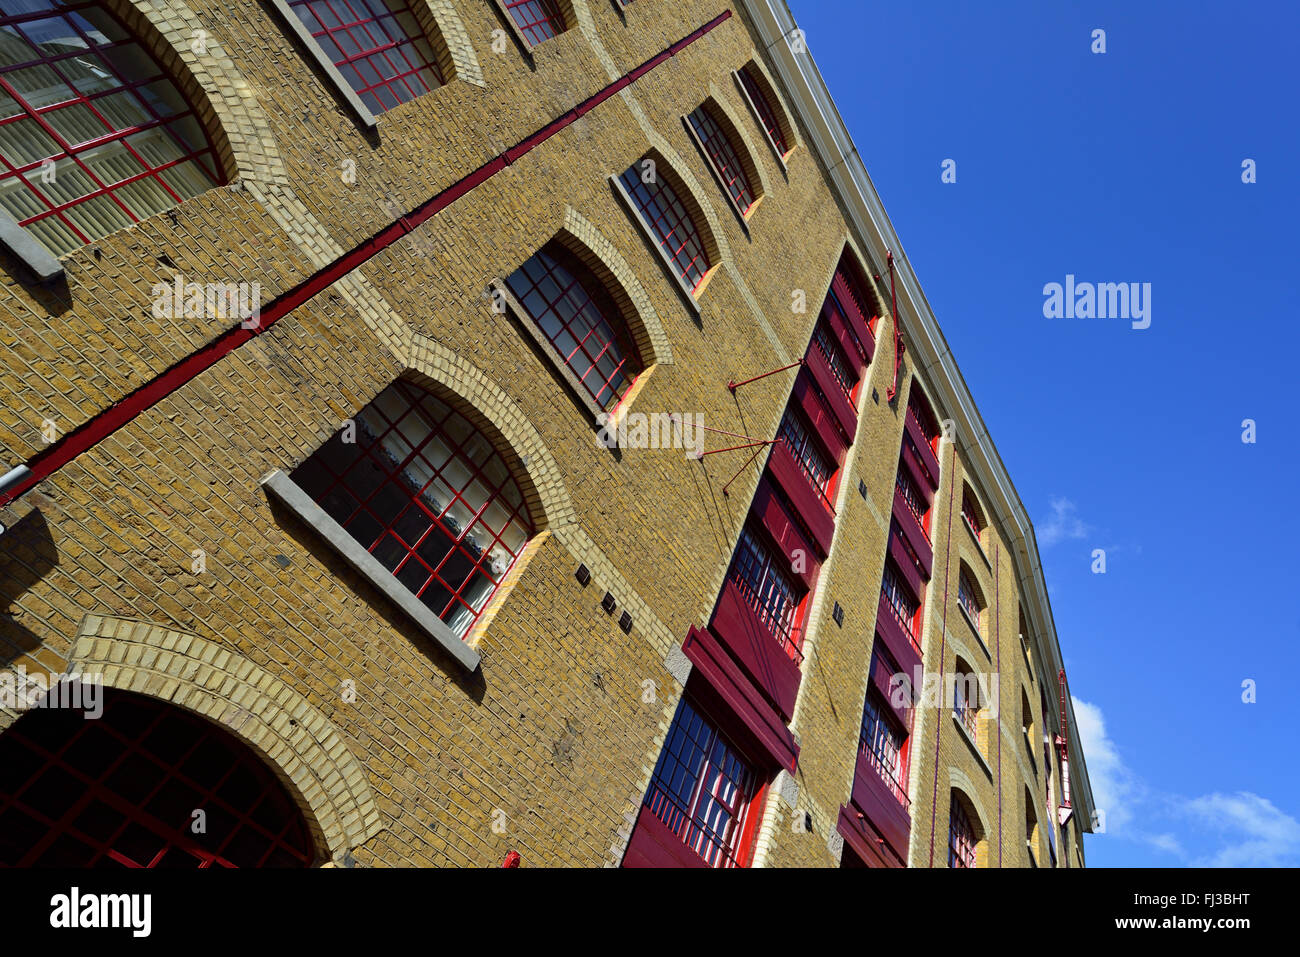 Warehouse apartments, Wapping, East London, United Kingdom Stock Photo